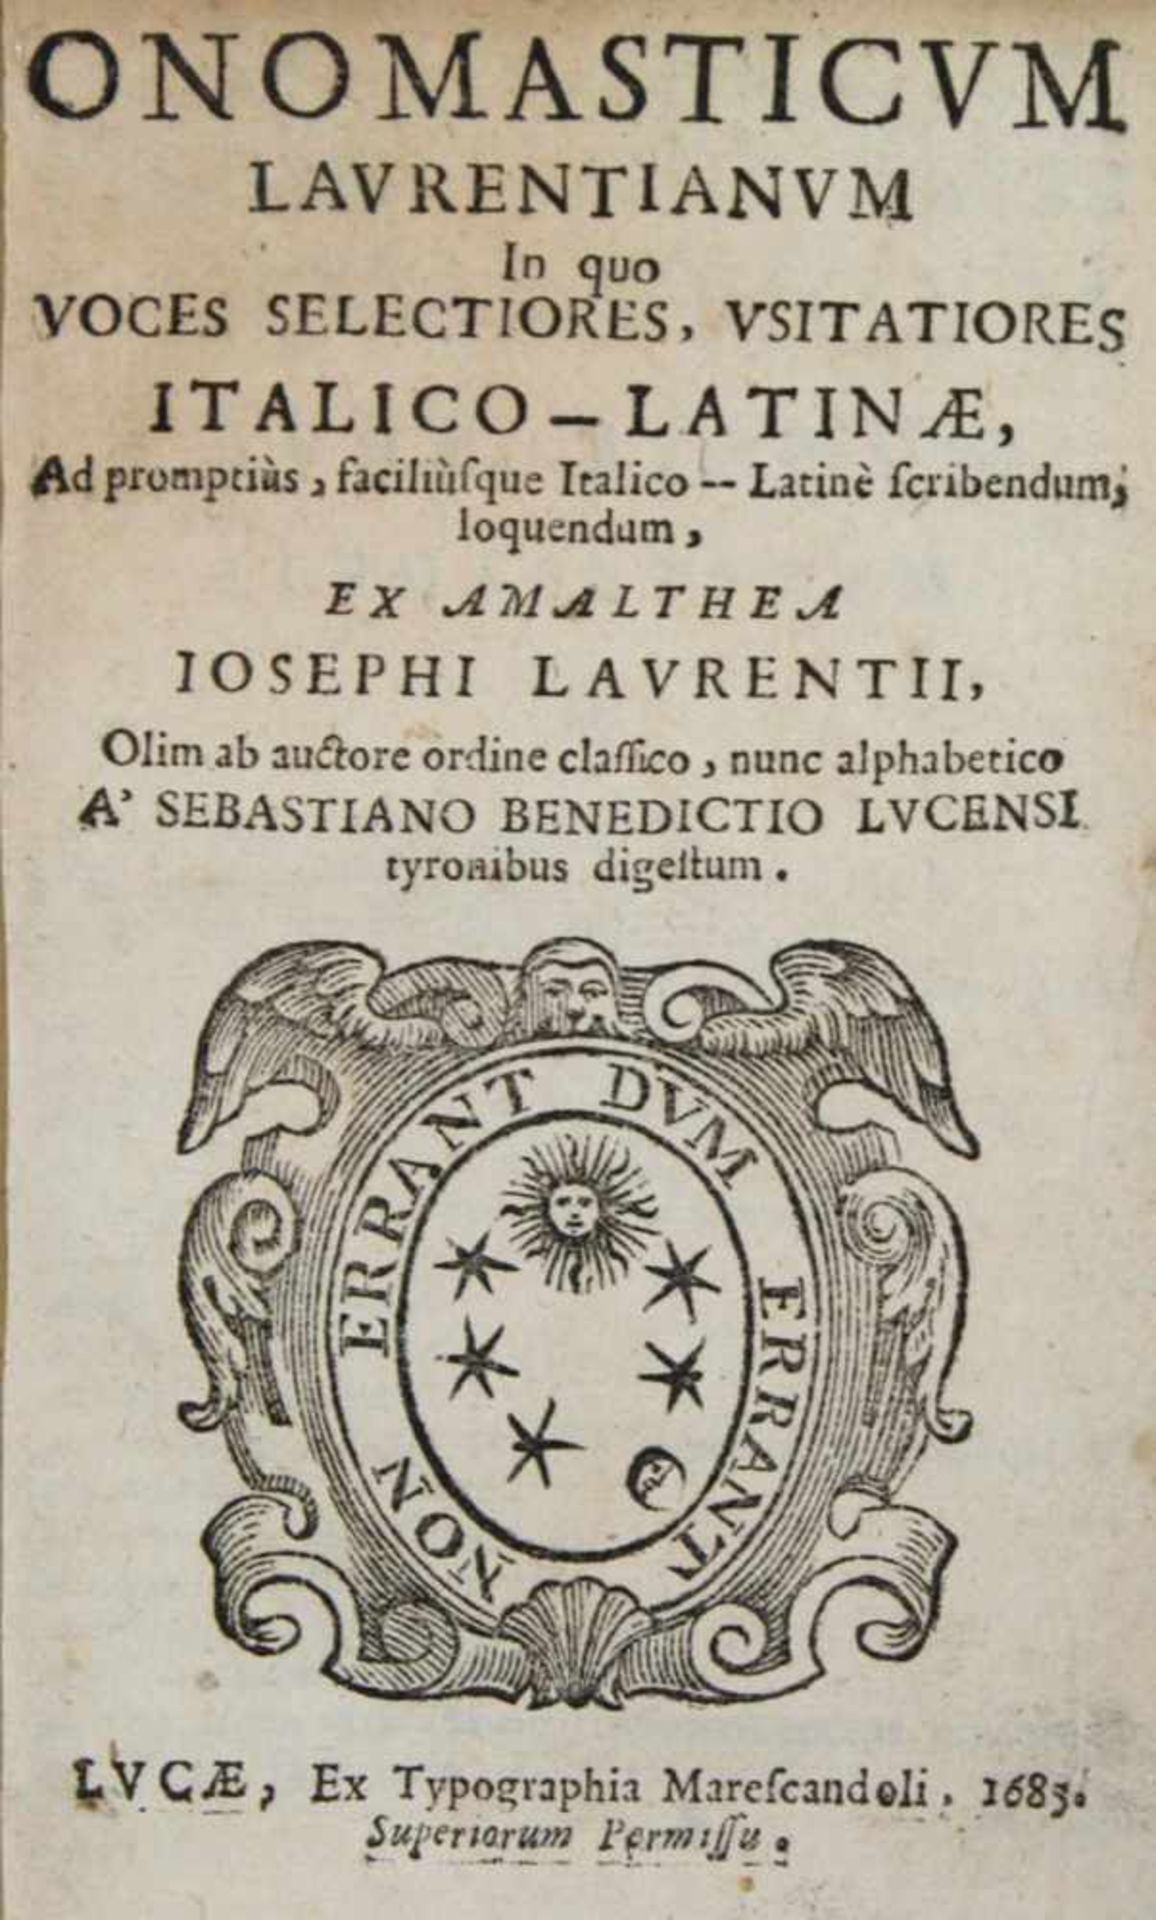 Laurenzi,G.Onomasticum Laurentianum ... Luca, Marescandoli 1685. Mit Holzschn.-Tvign. 240 S. Mod.